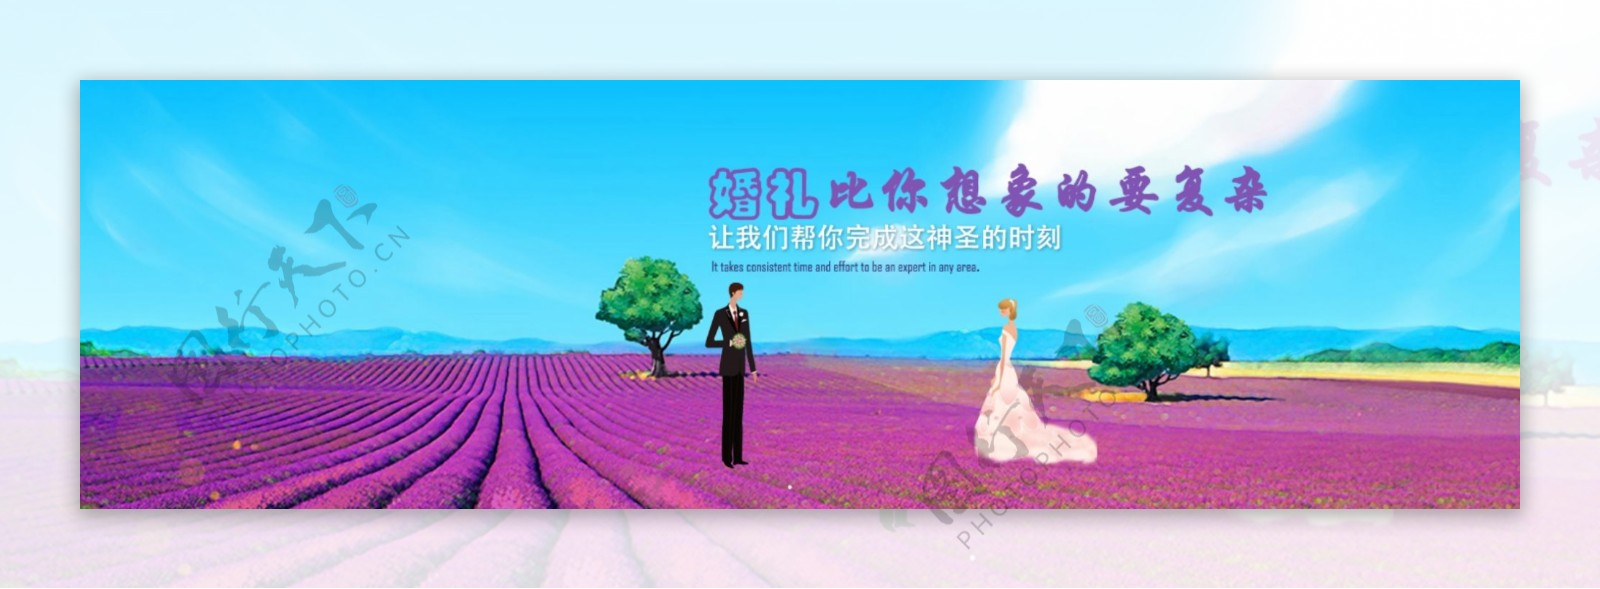 婚庆网页banner图